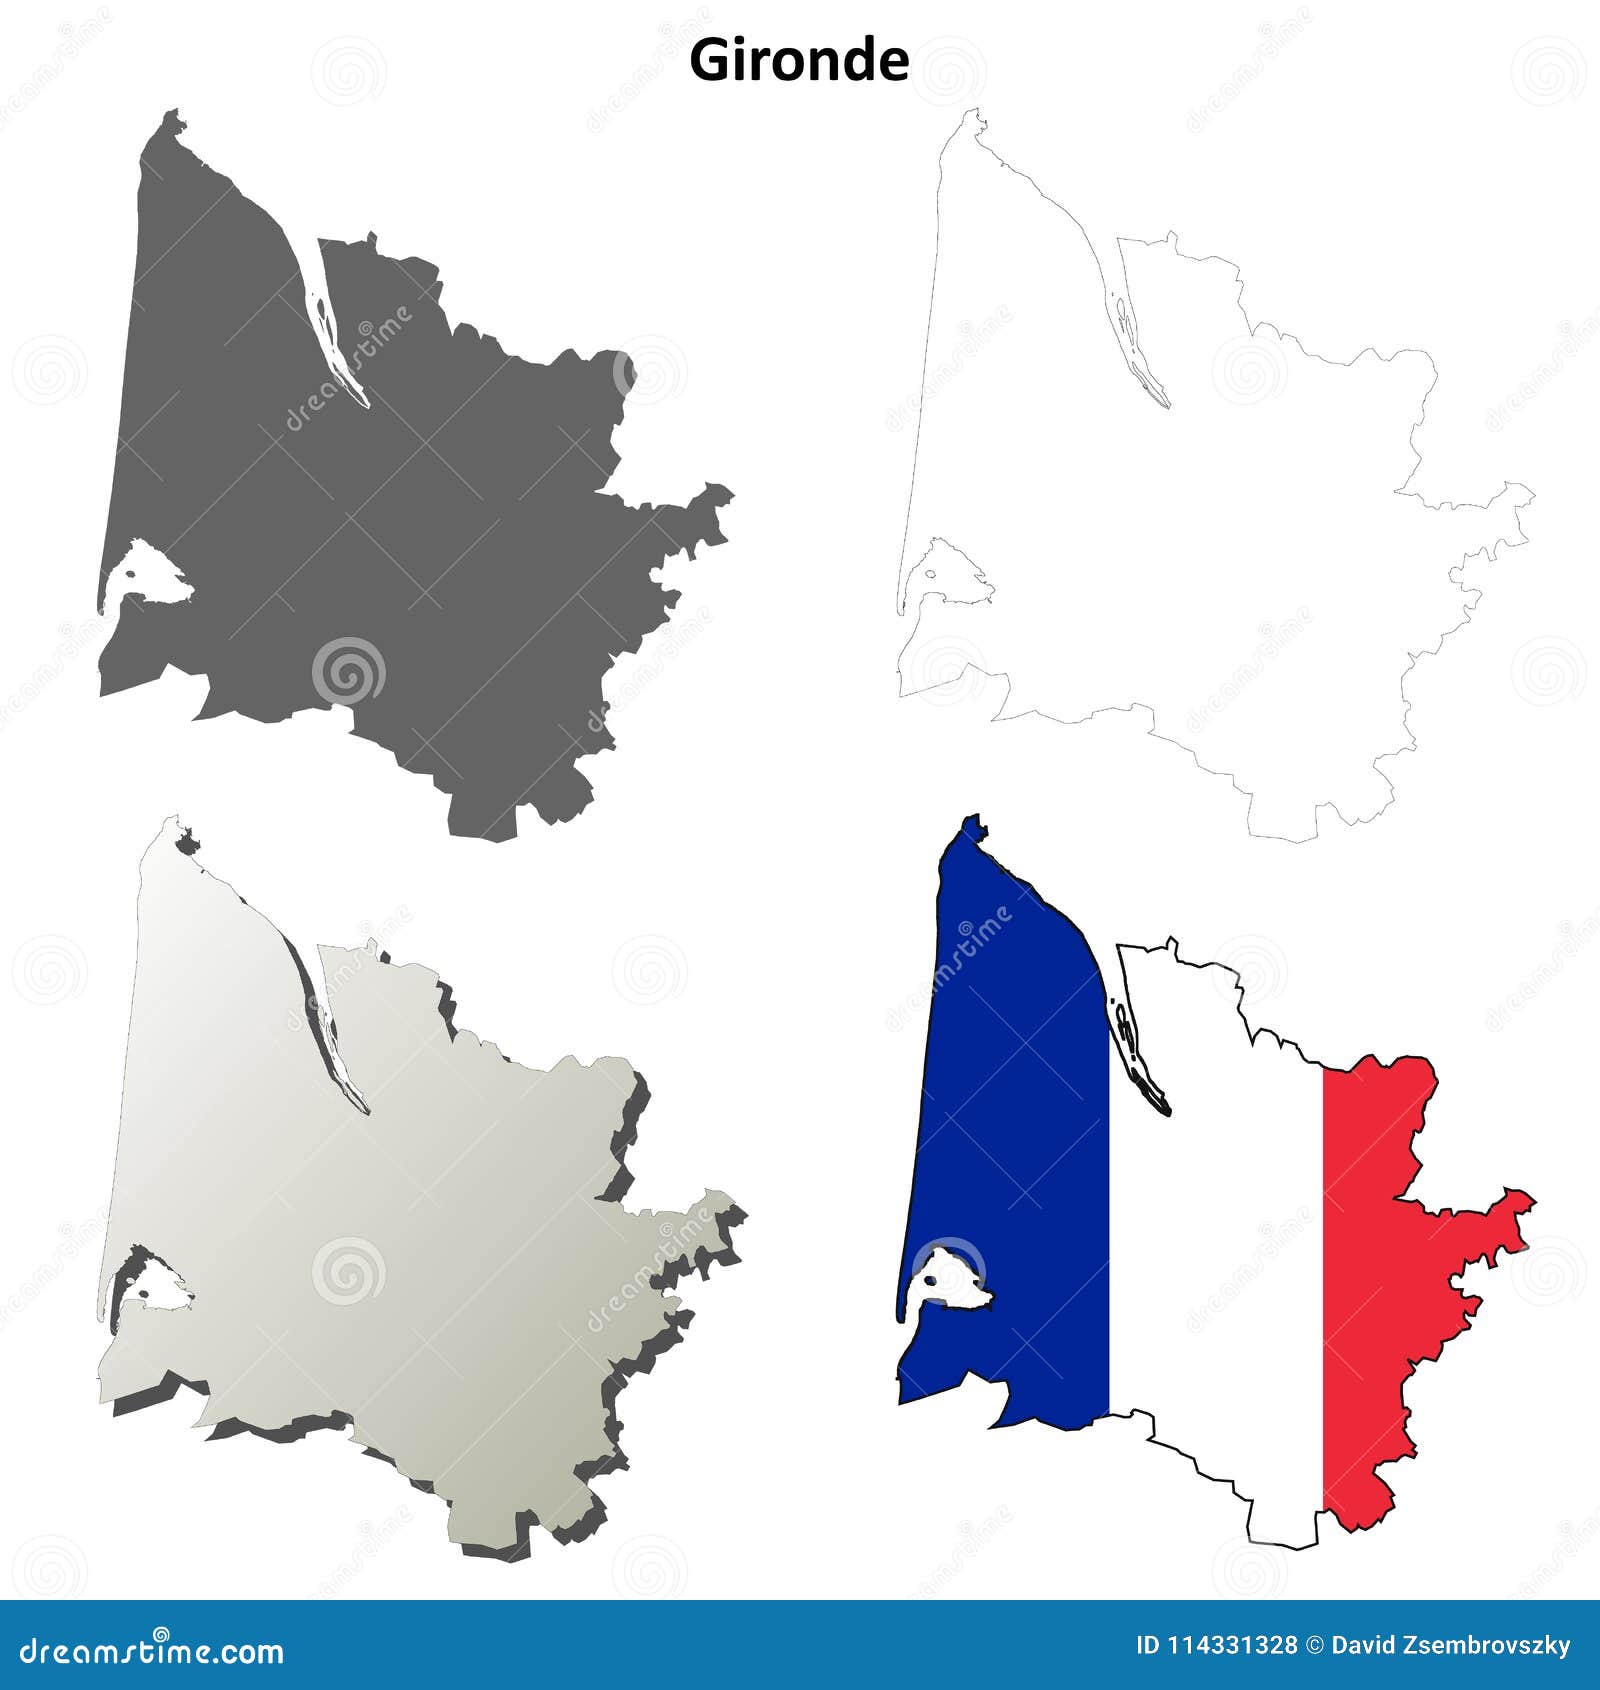 gironde, aquitaine outline map set